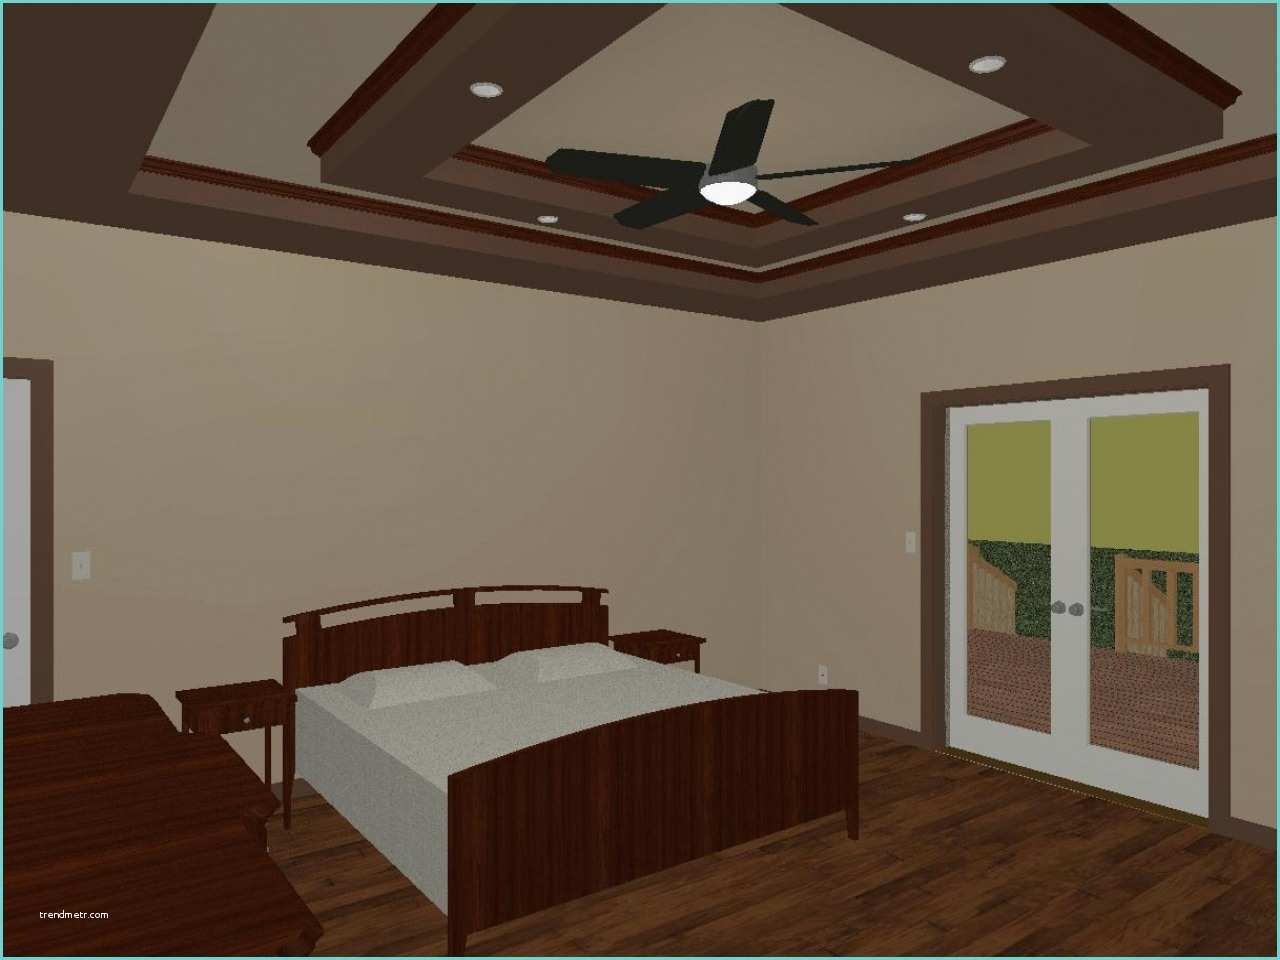 Design Of Pop On Roof Down Ceiling Designs for Bedroom